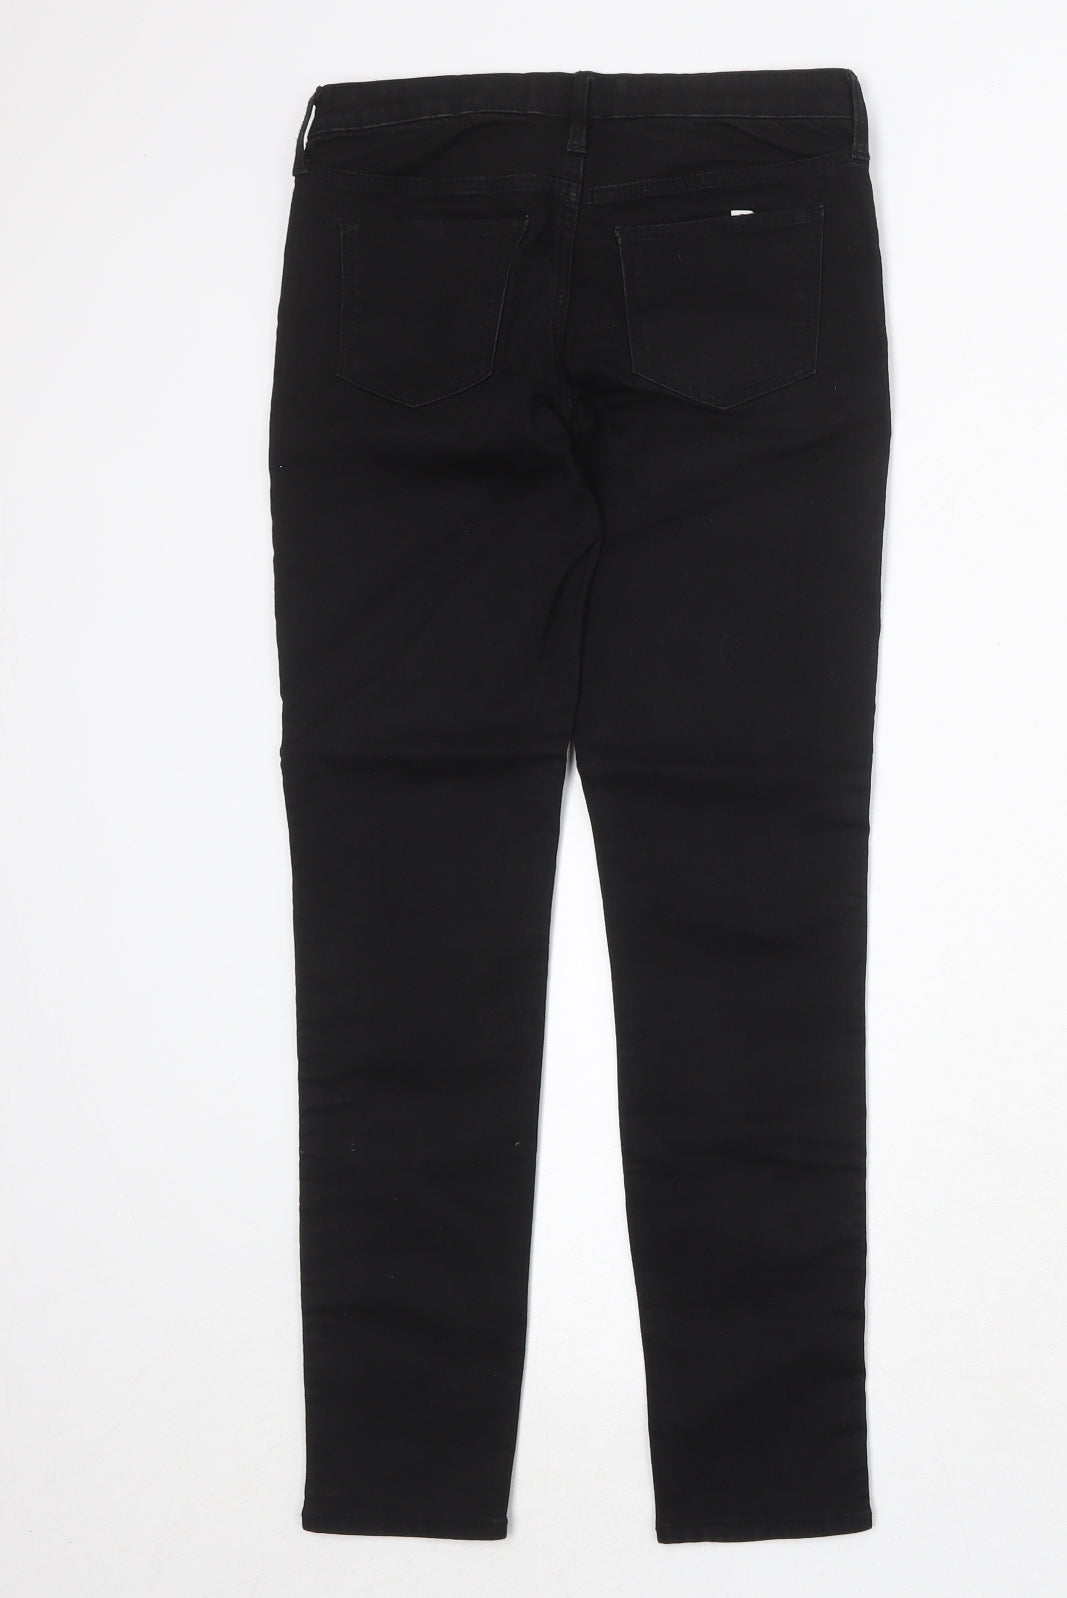 H&M Girls Black Cotton Skinny Jeans Size 10-11 Years Regular Zip